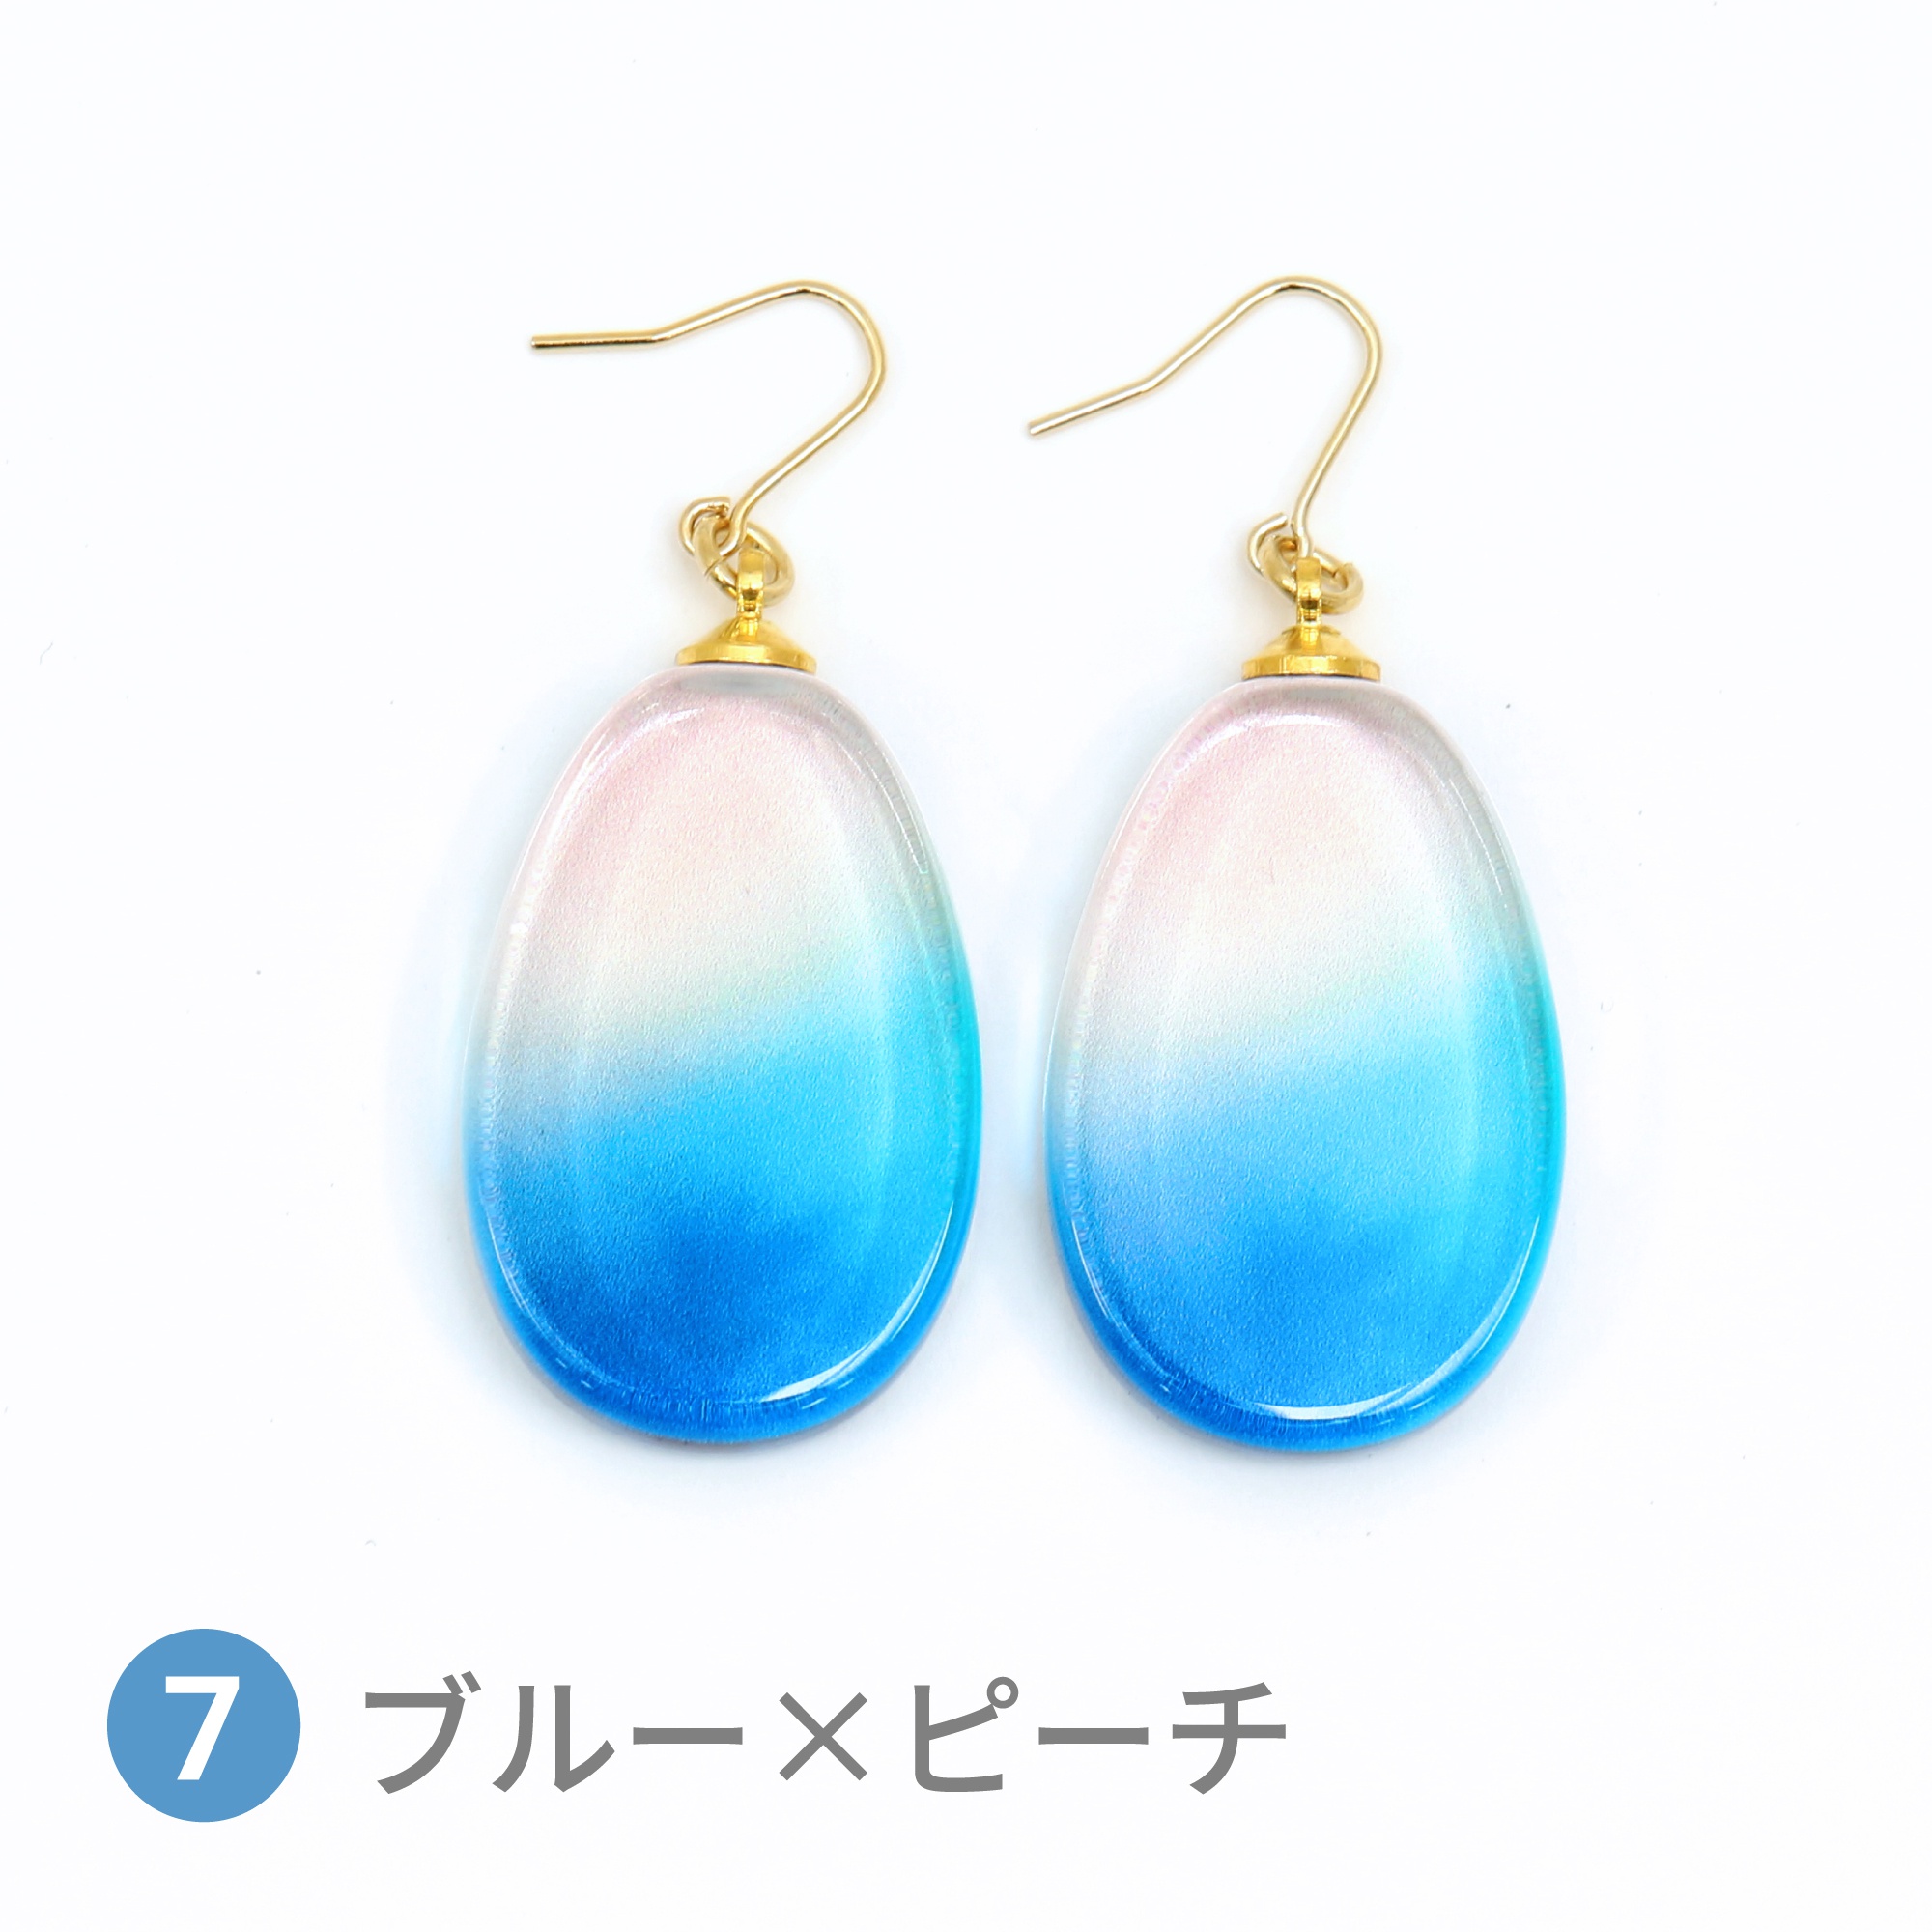 Glass accessories Pierced Earring AURORA blue & peach drop shape